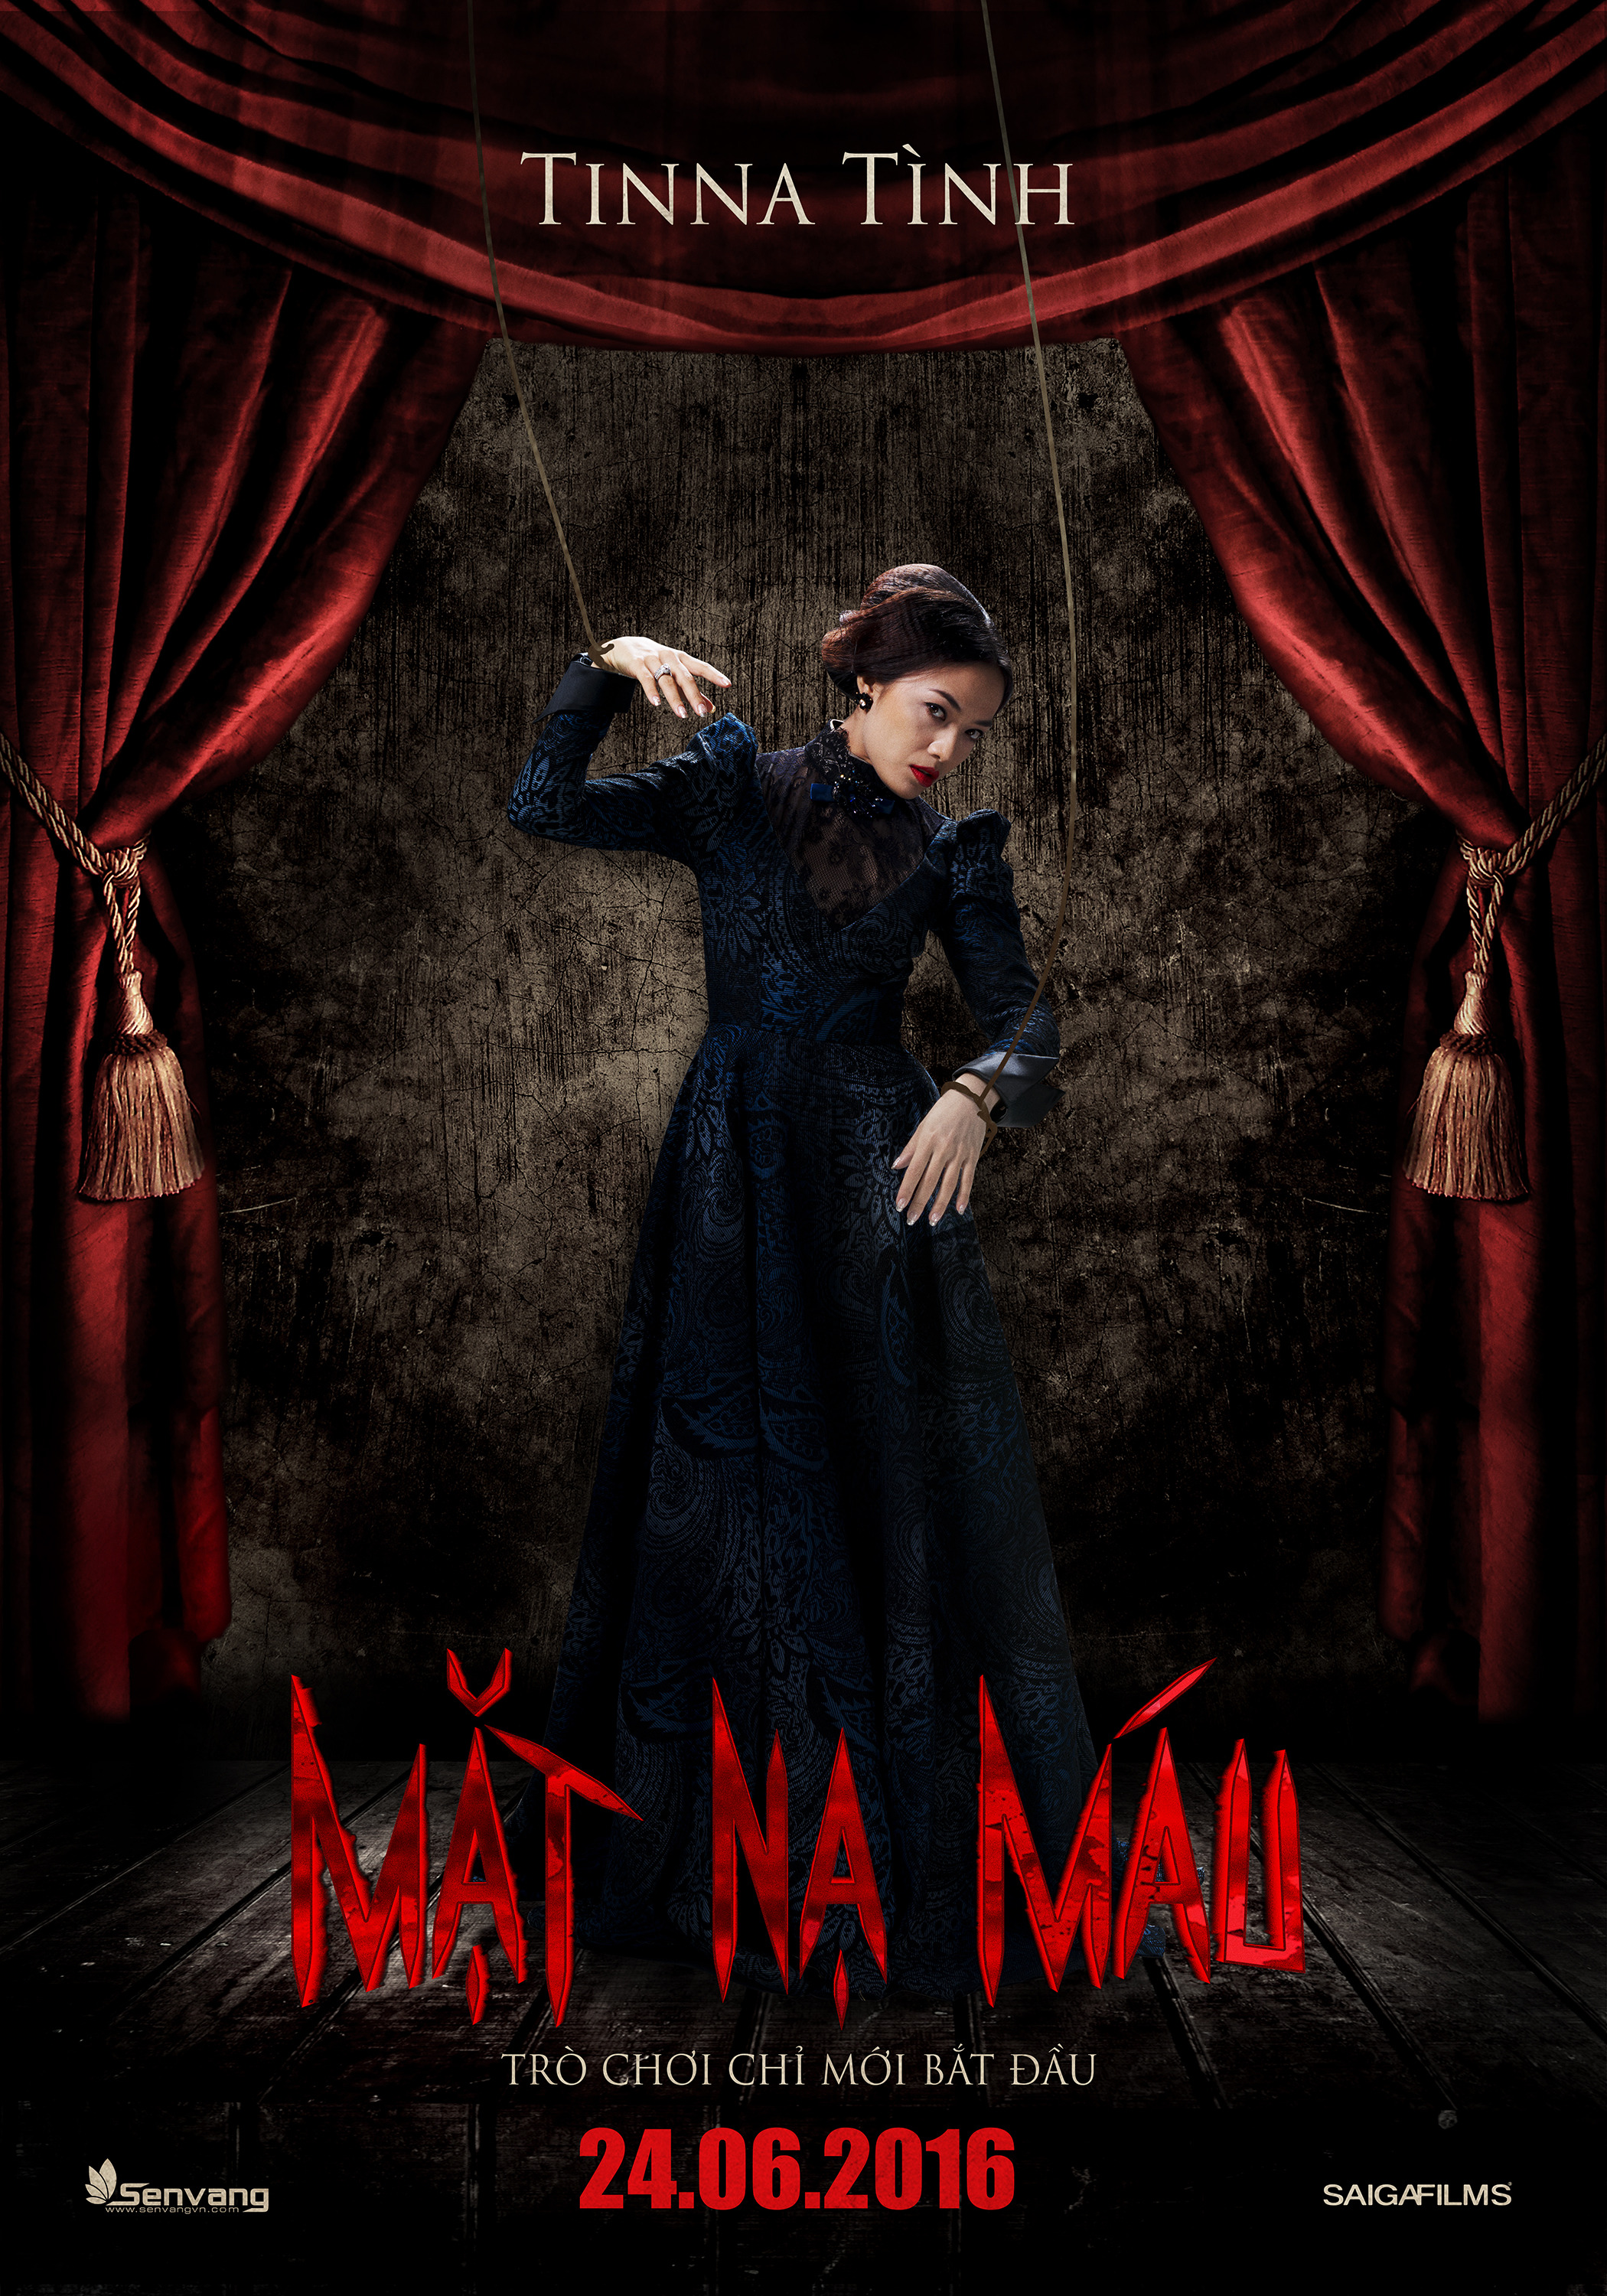 Mega Sized Movie Poster Image for Mat Na Mau (#10 of 10)